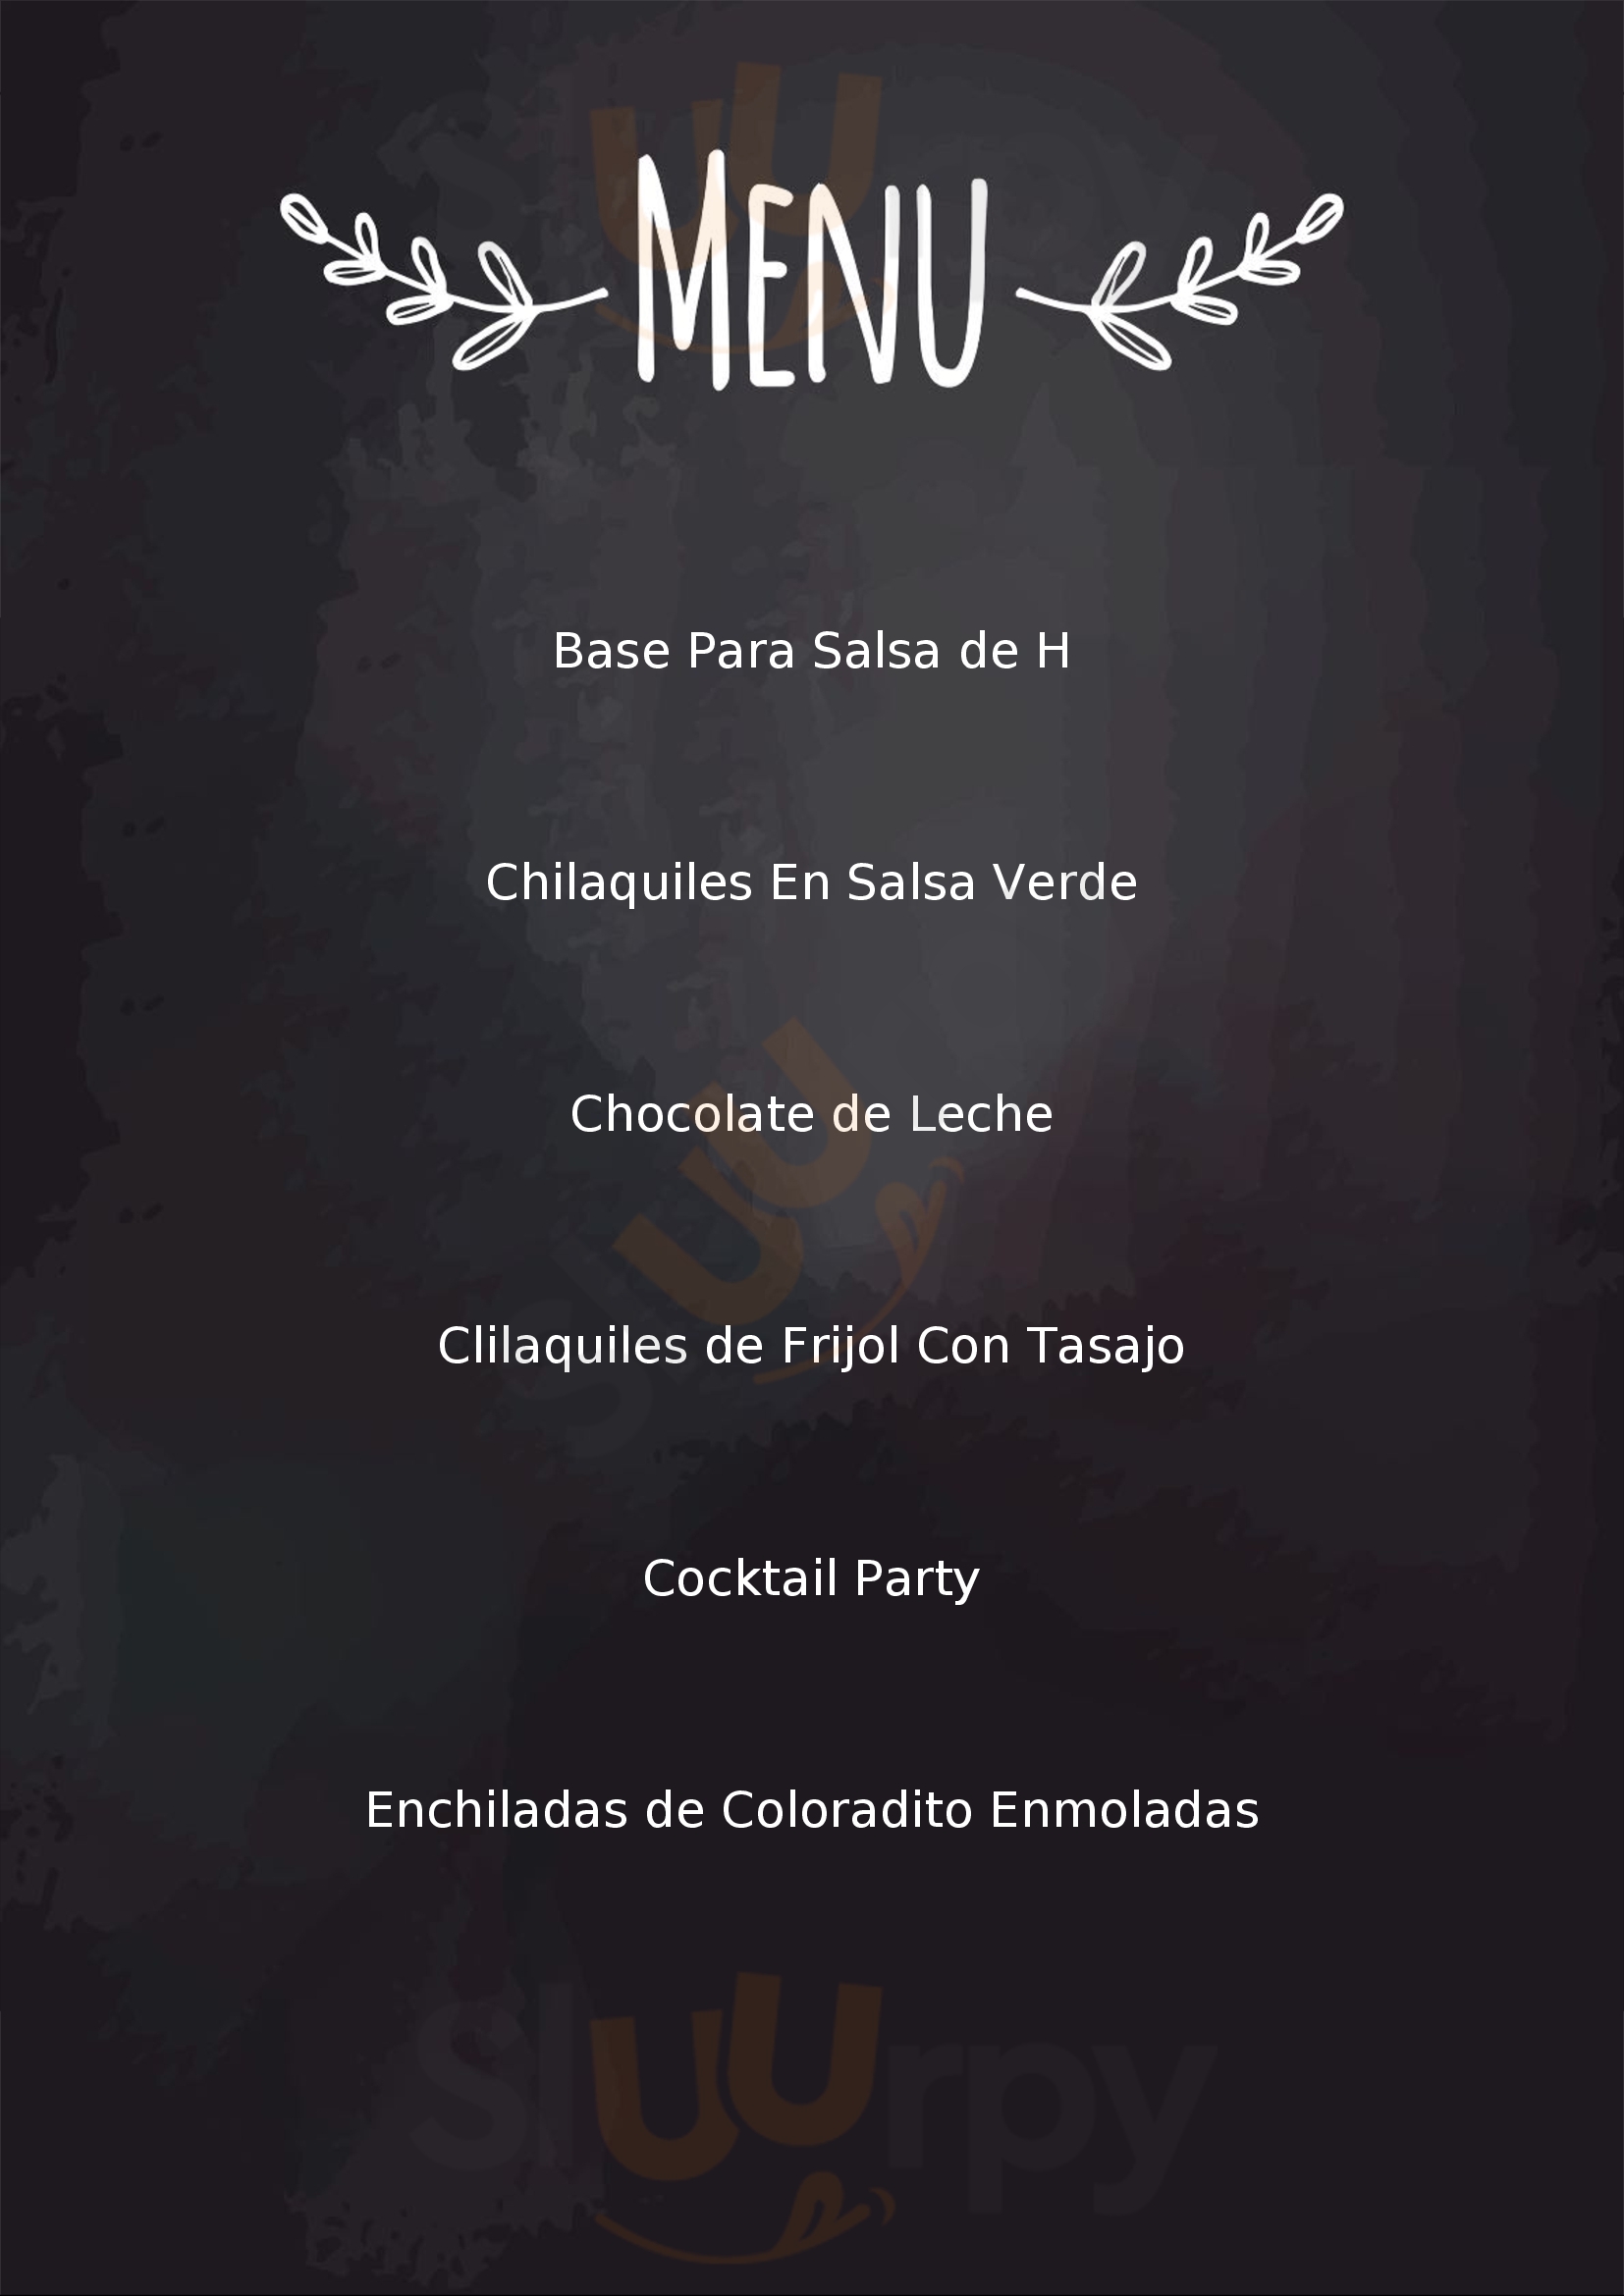 La Cocina De M&w Oaxaca Menu - 1